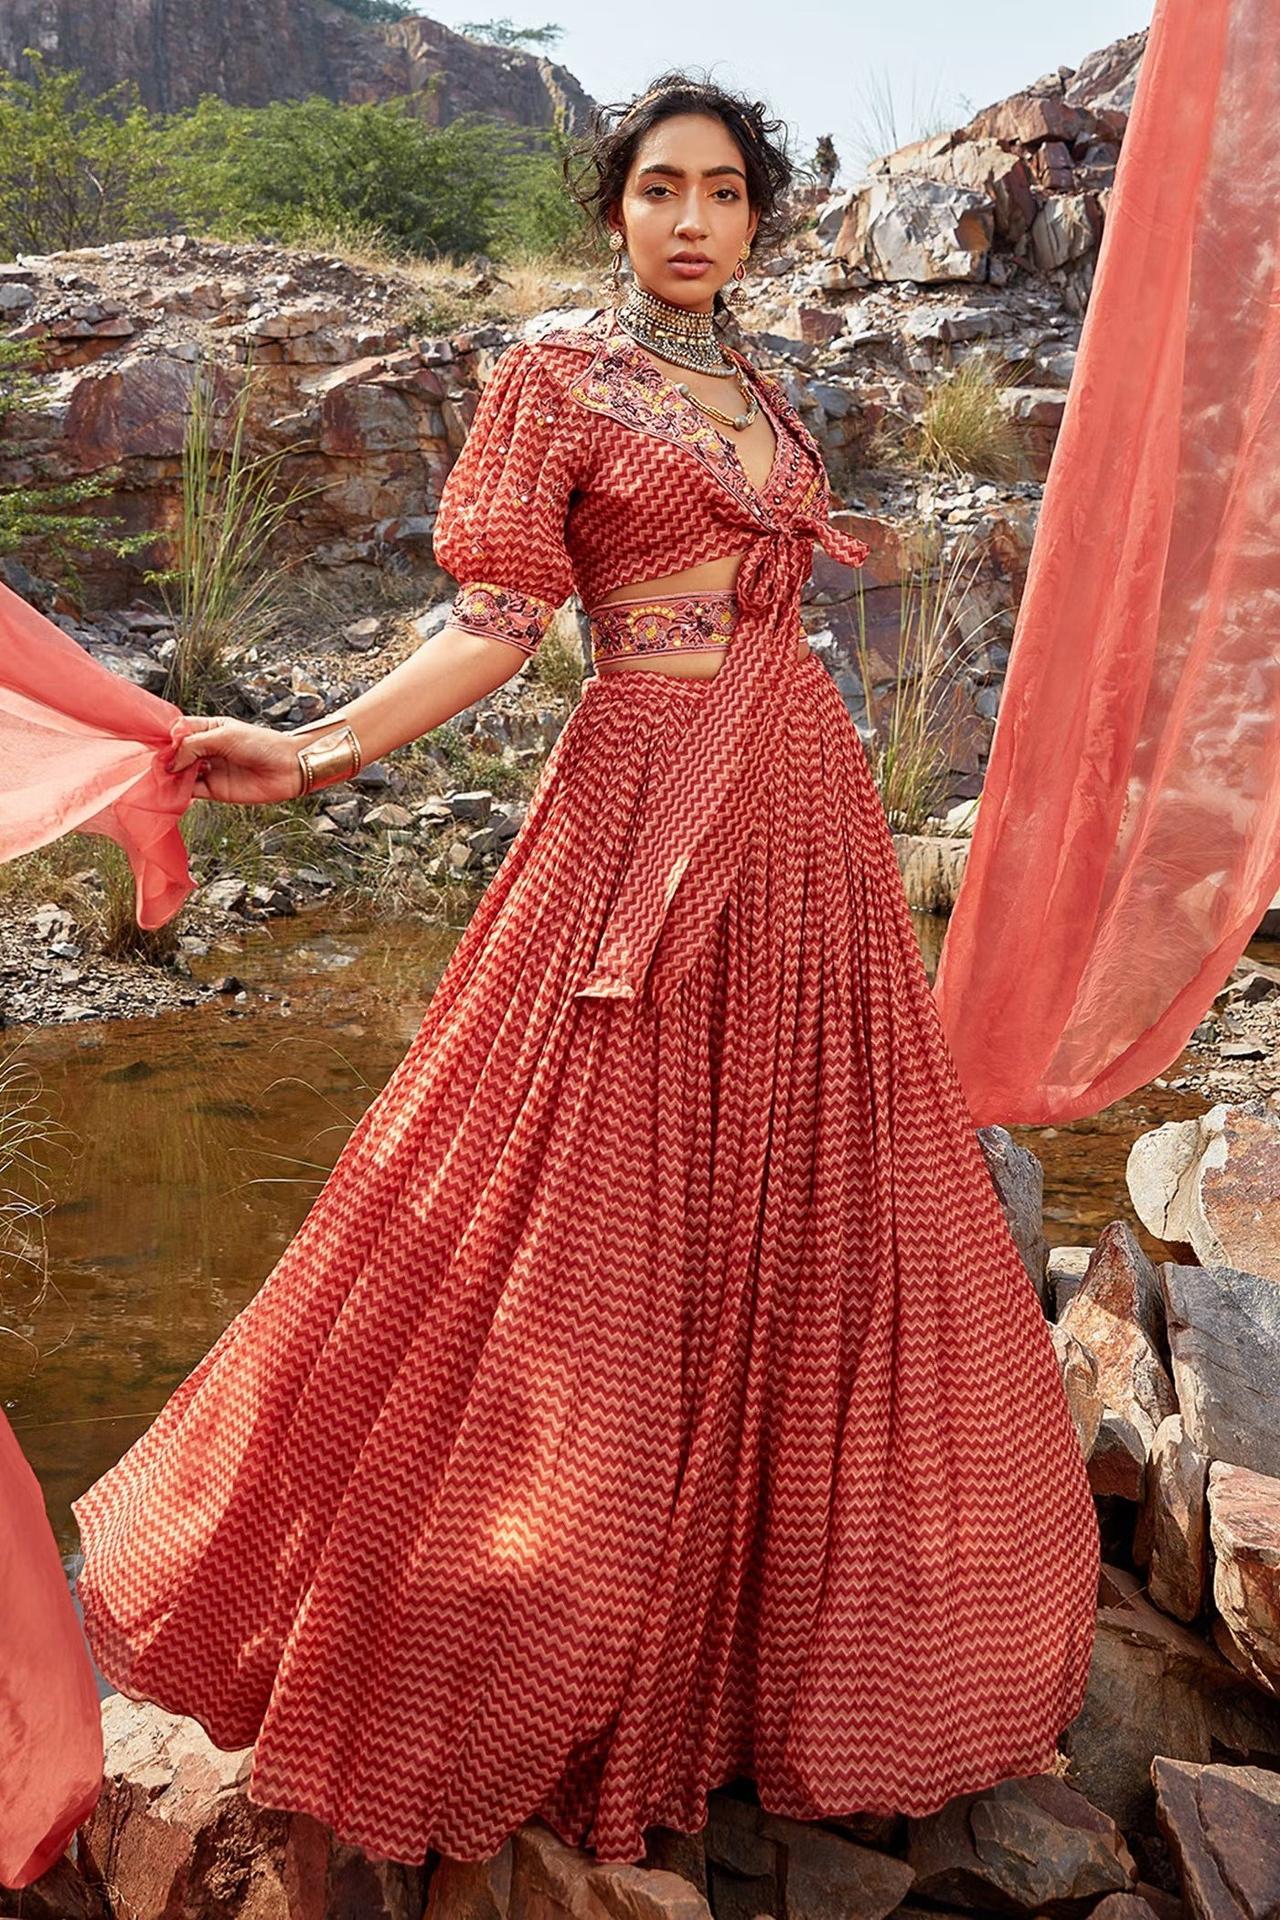 Blouse Designs - Wedding Blouse Designs - Lehenga Designs, Vogue India